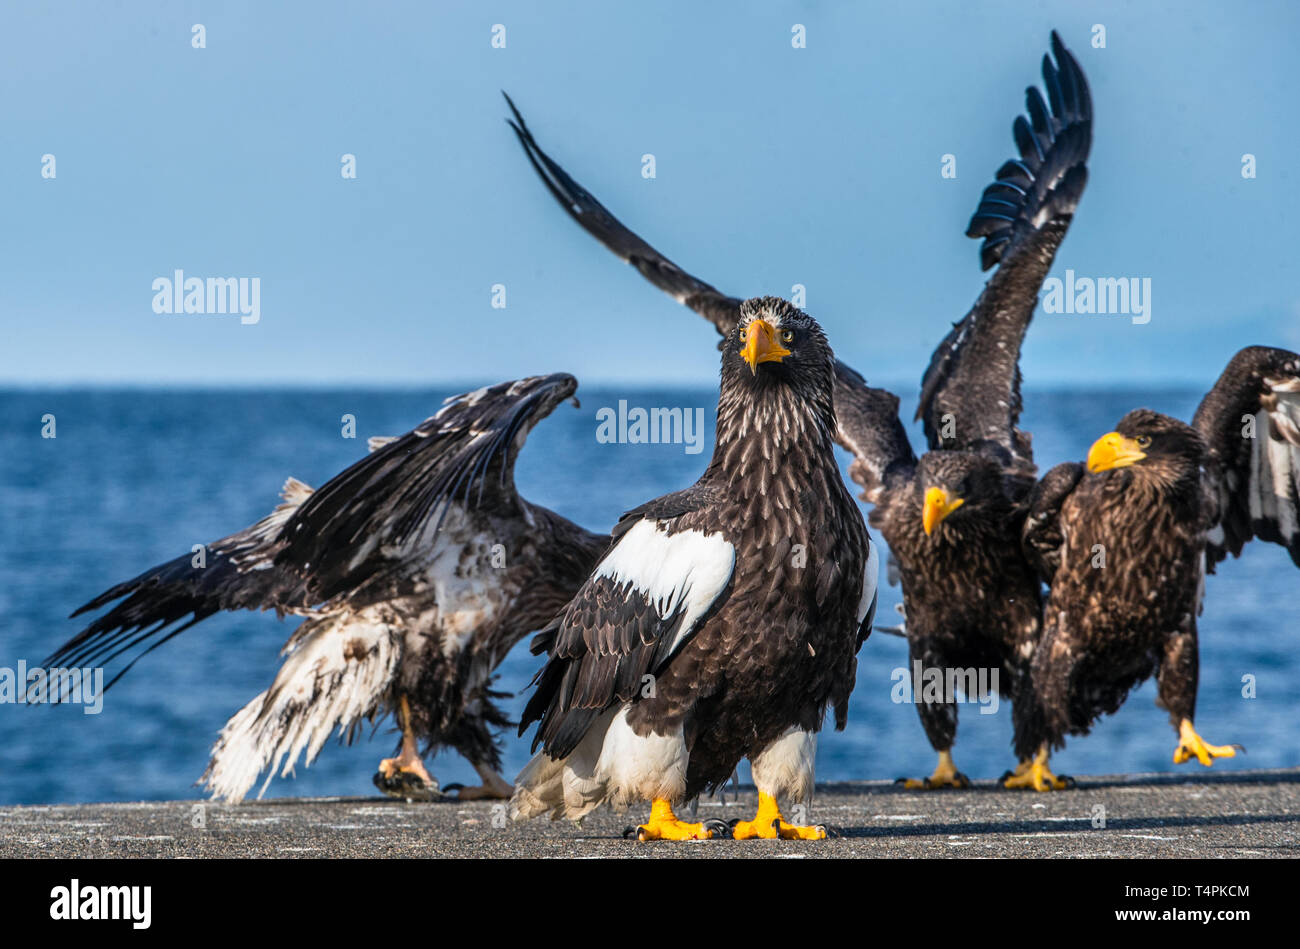 Adult Steller`s sea eagles. Close up portrait of Adult Steller's sea eagle. Scientific name: Haliaeetus pelagicus. Stock Photo